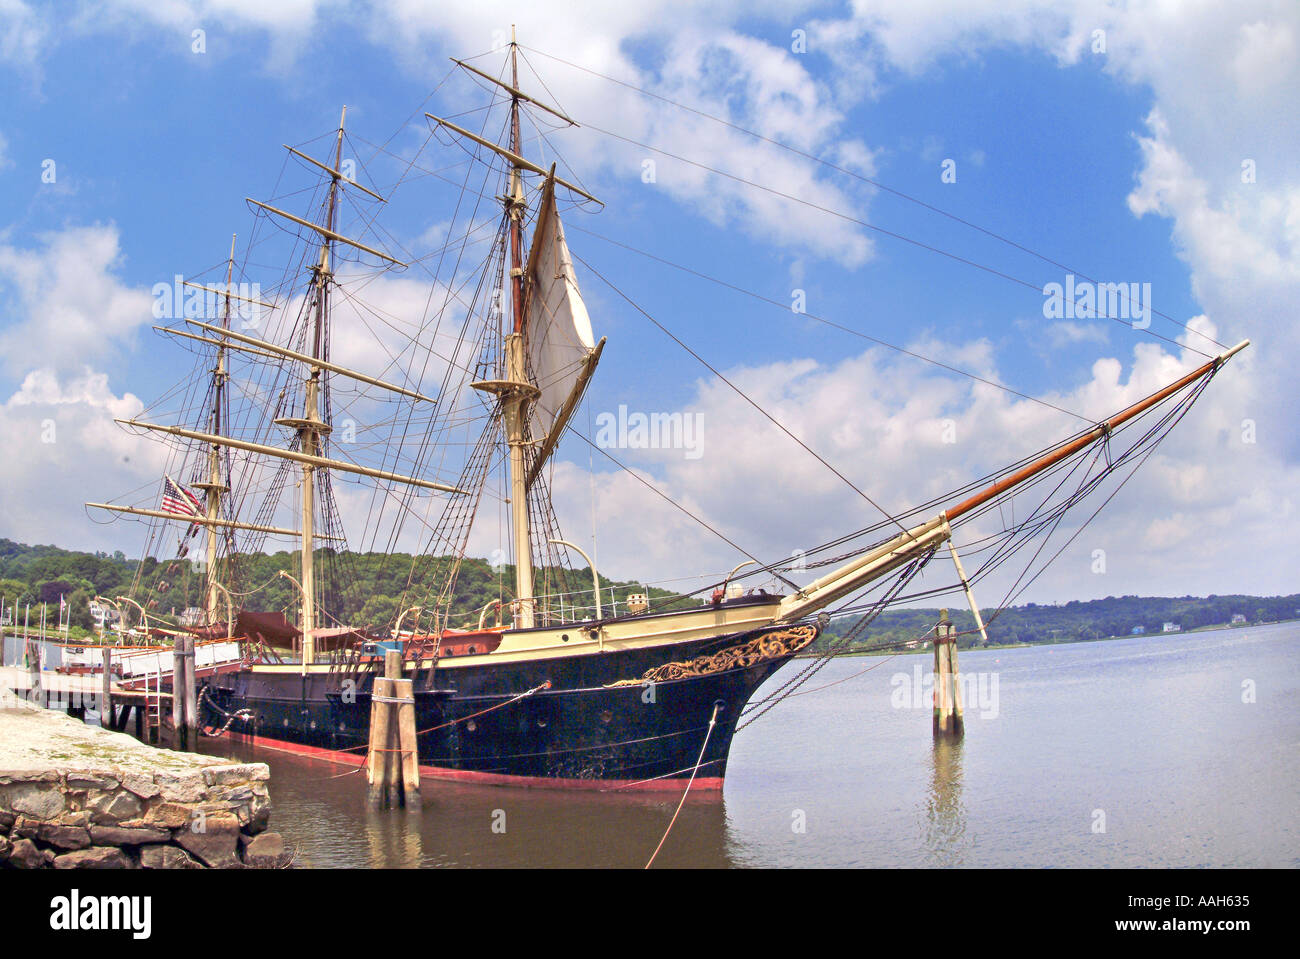 Square rigger sailing ship Stock Photo